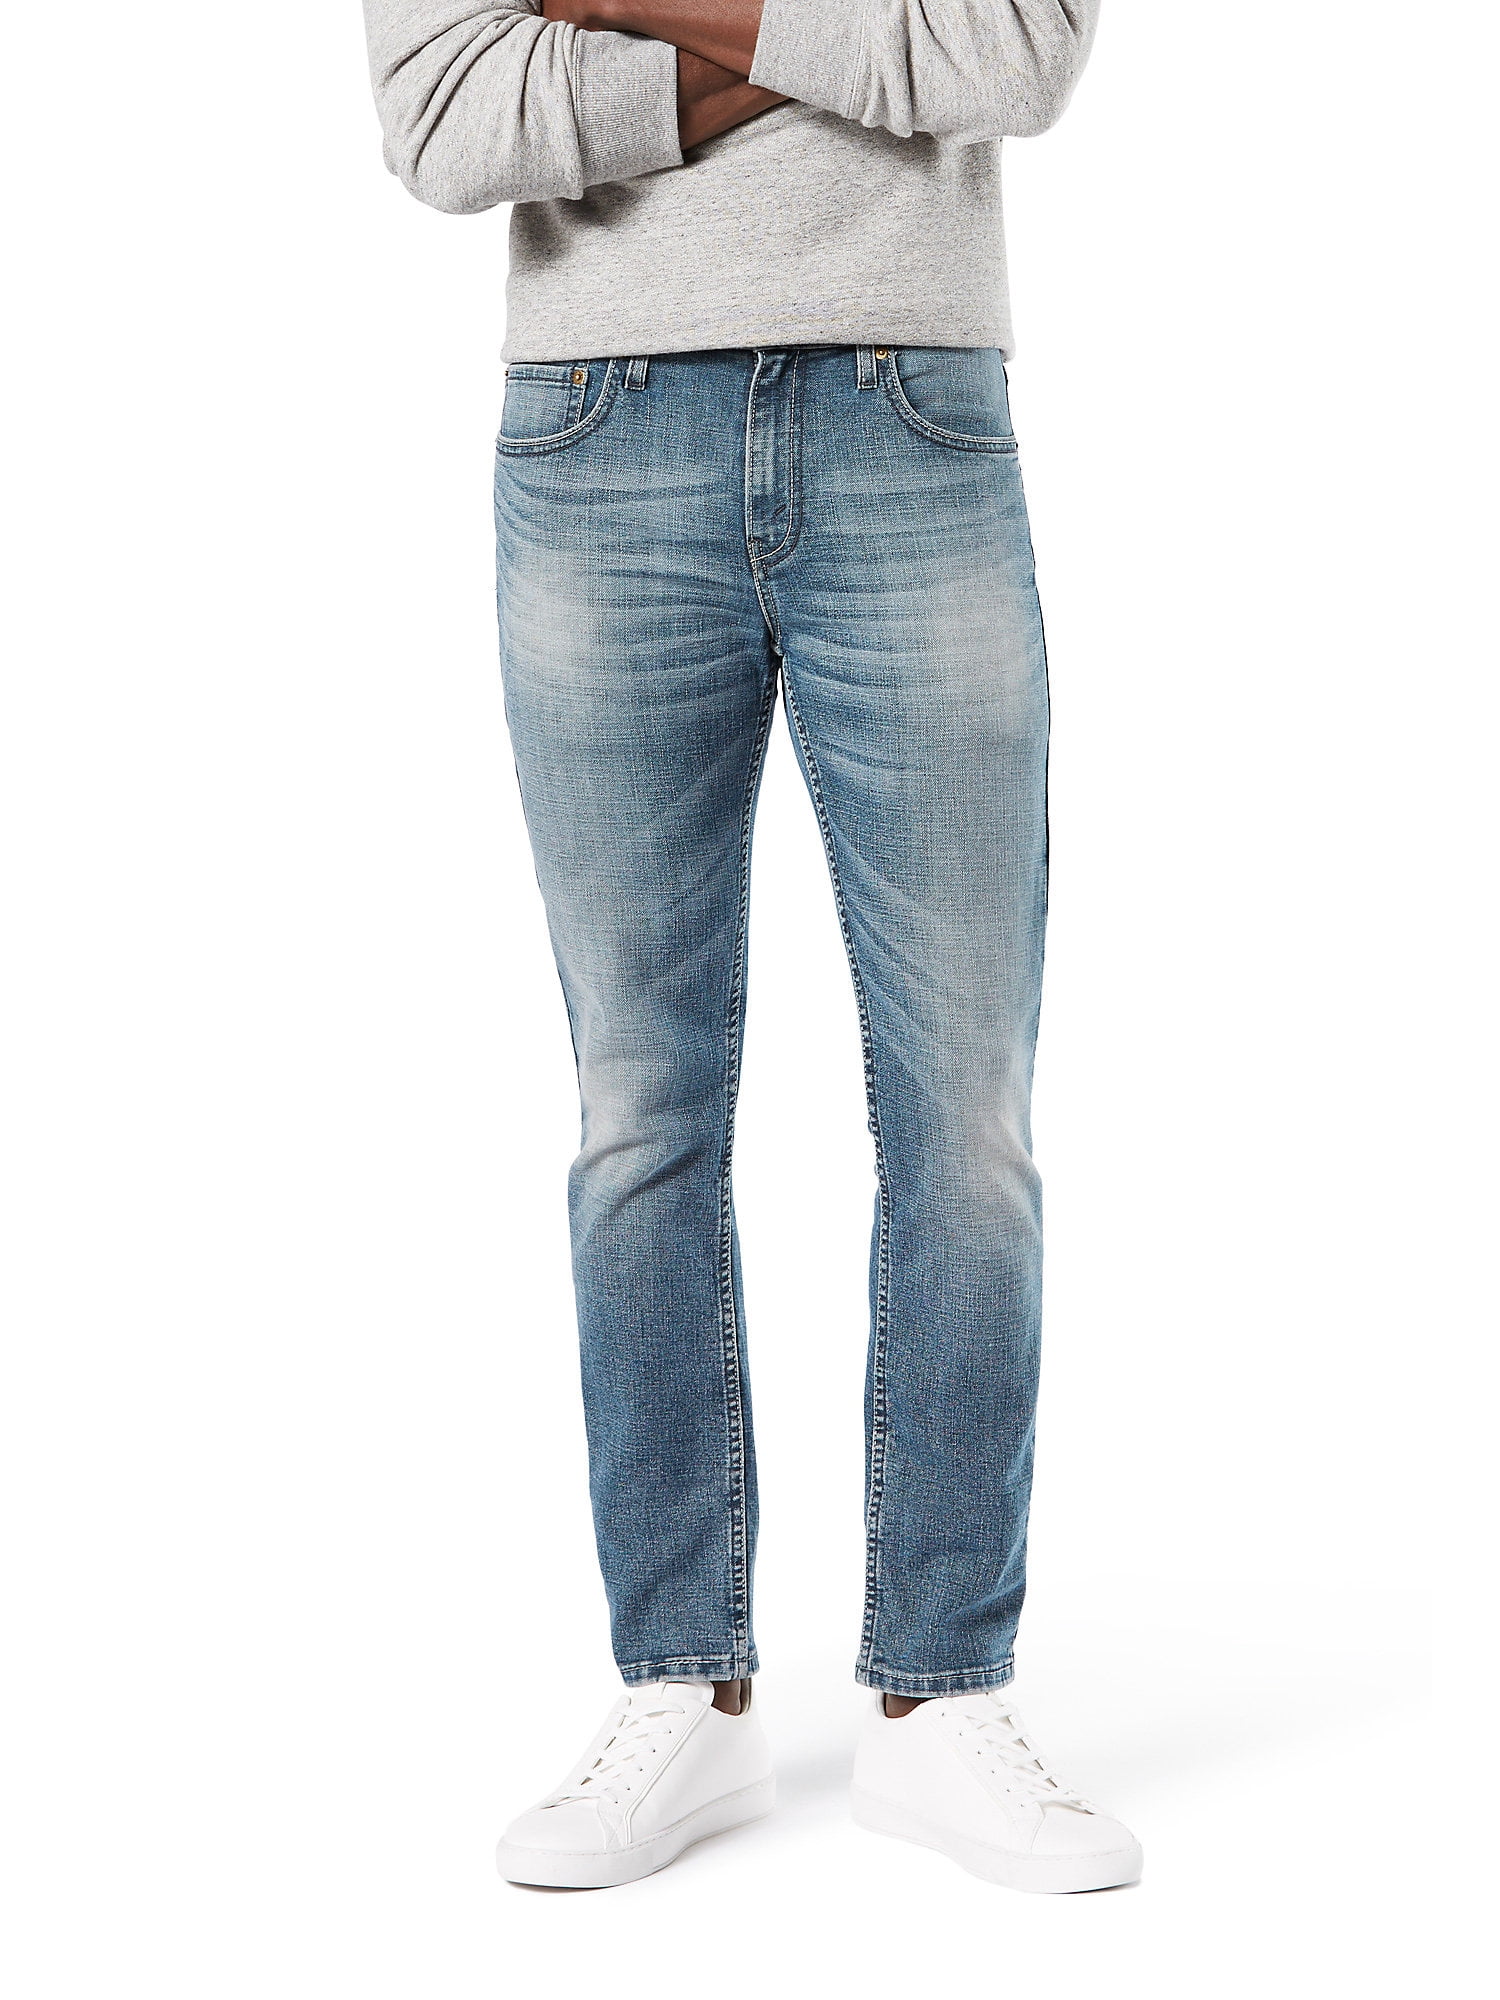 Levi & Co. Men's Skinny Fit Jeans -